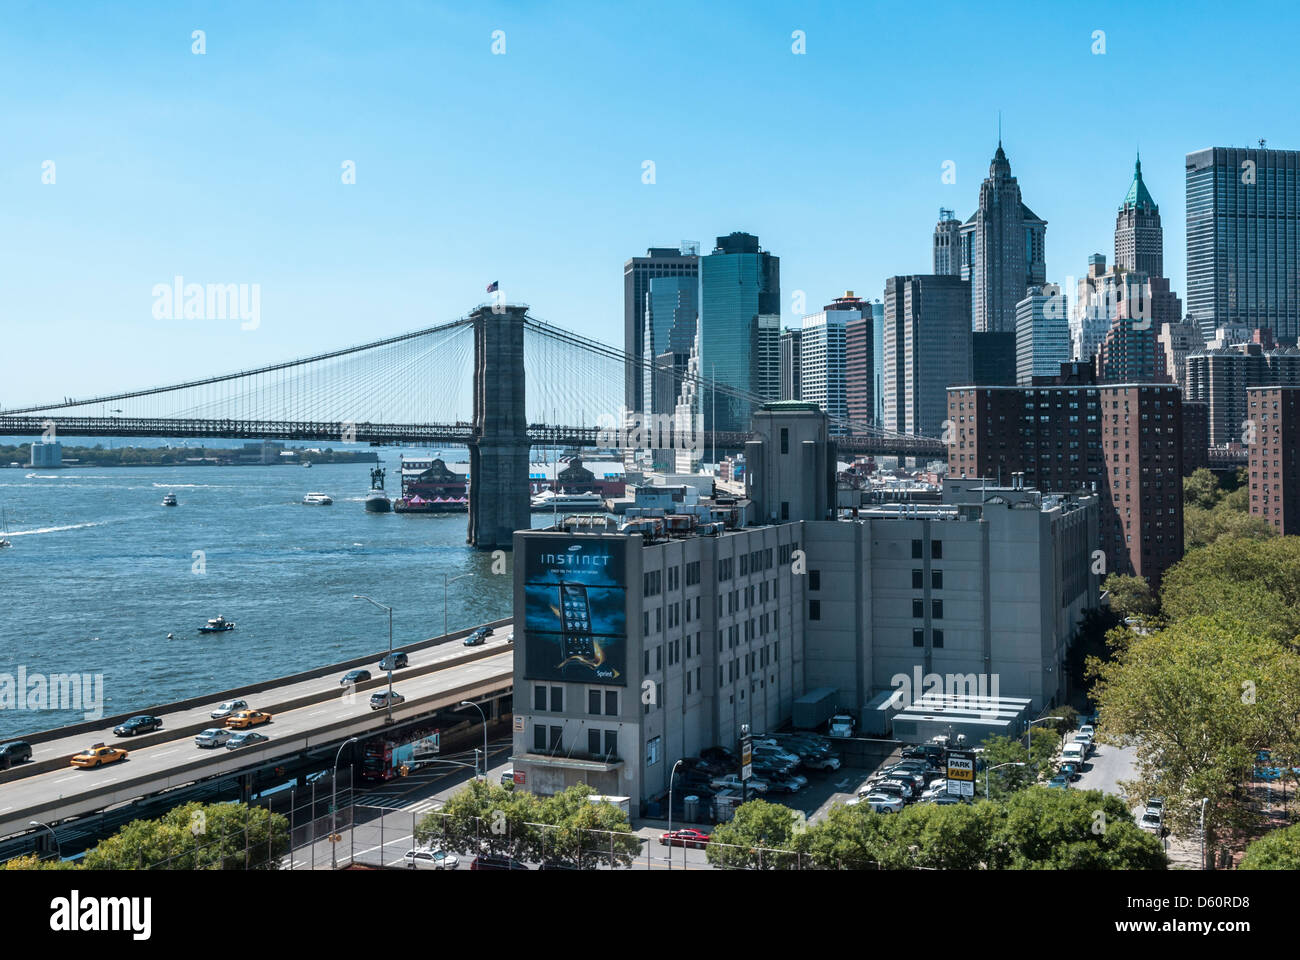 Cityscape of Lower Manhattan with Brooklyn bridge, New York city, New York, USA - Image taken from public ground Stock Photo